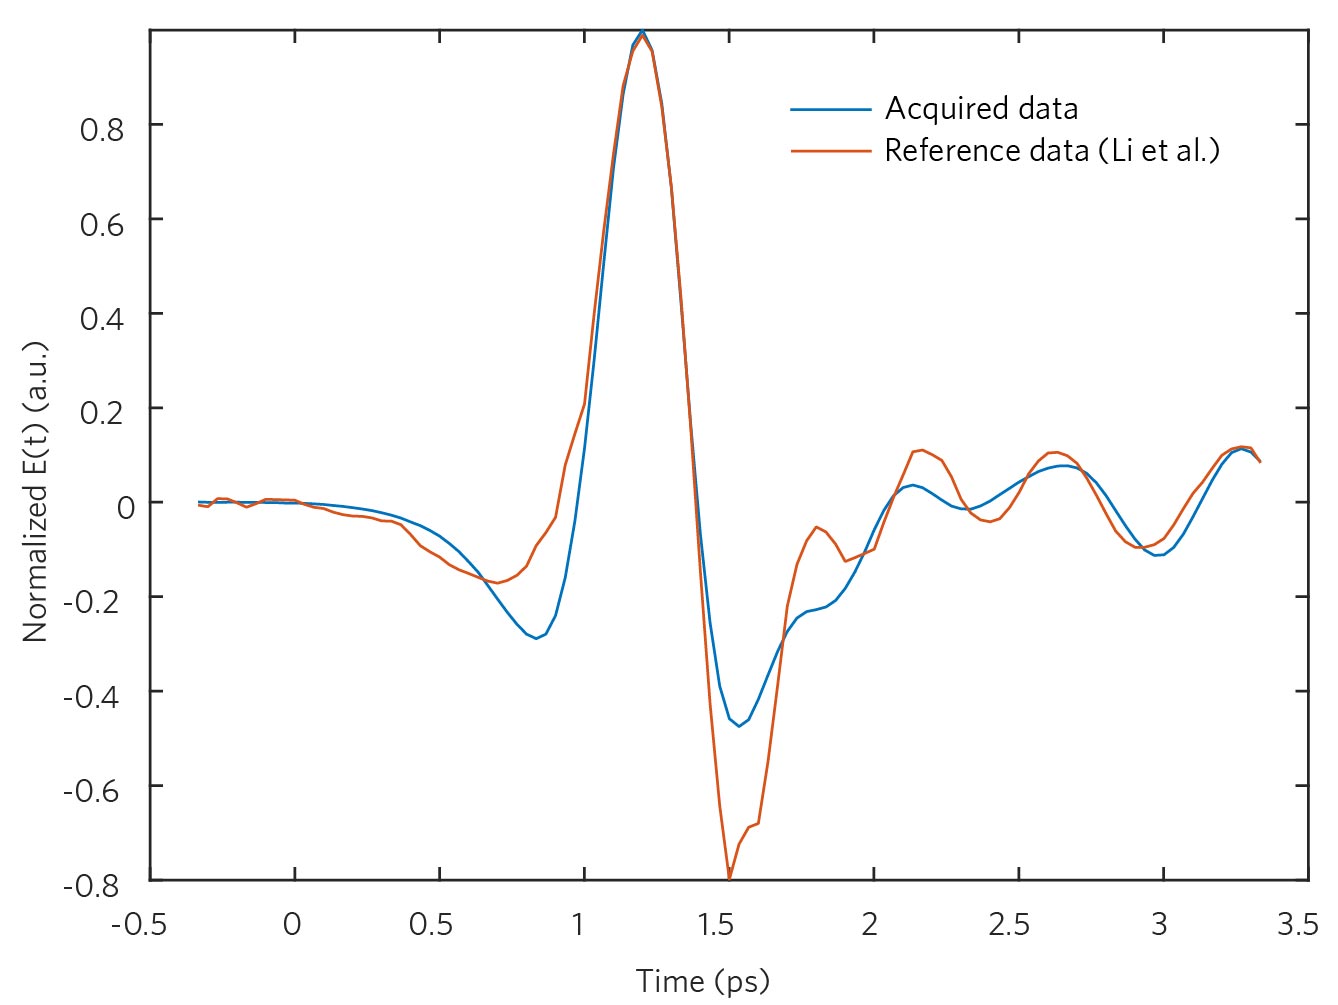 Figure 9 | Time-domain data of terahertz emission from Co/Pt thin film bilayer, acquired data vs reference data (Li et al, figure 3b).[28]